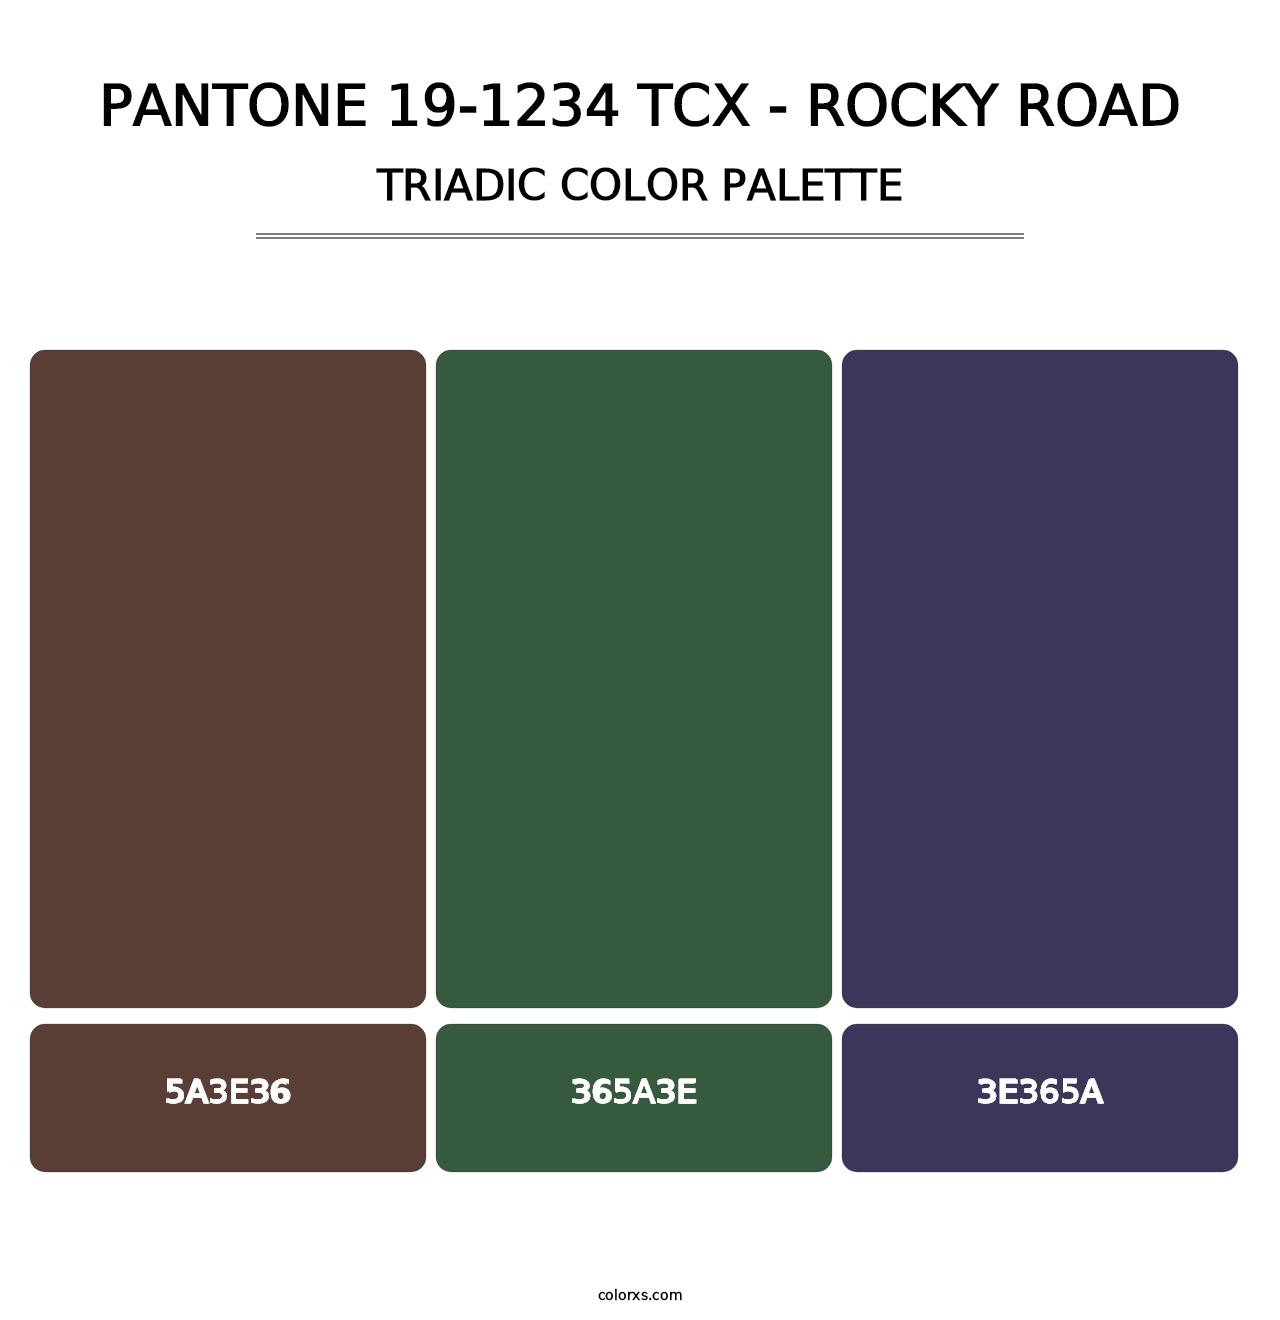 PANTONE 19-1234 TCX - Rocky Road - Triadic Color Palette